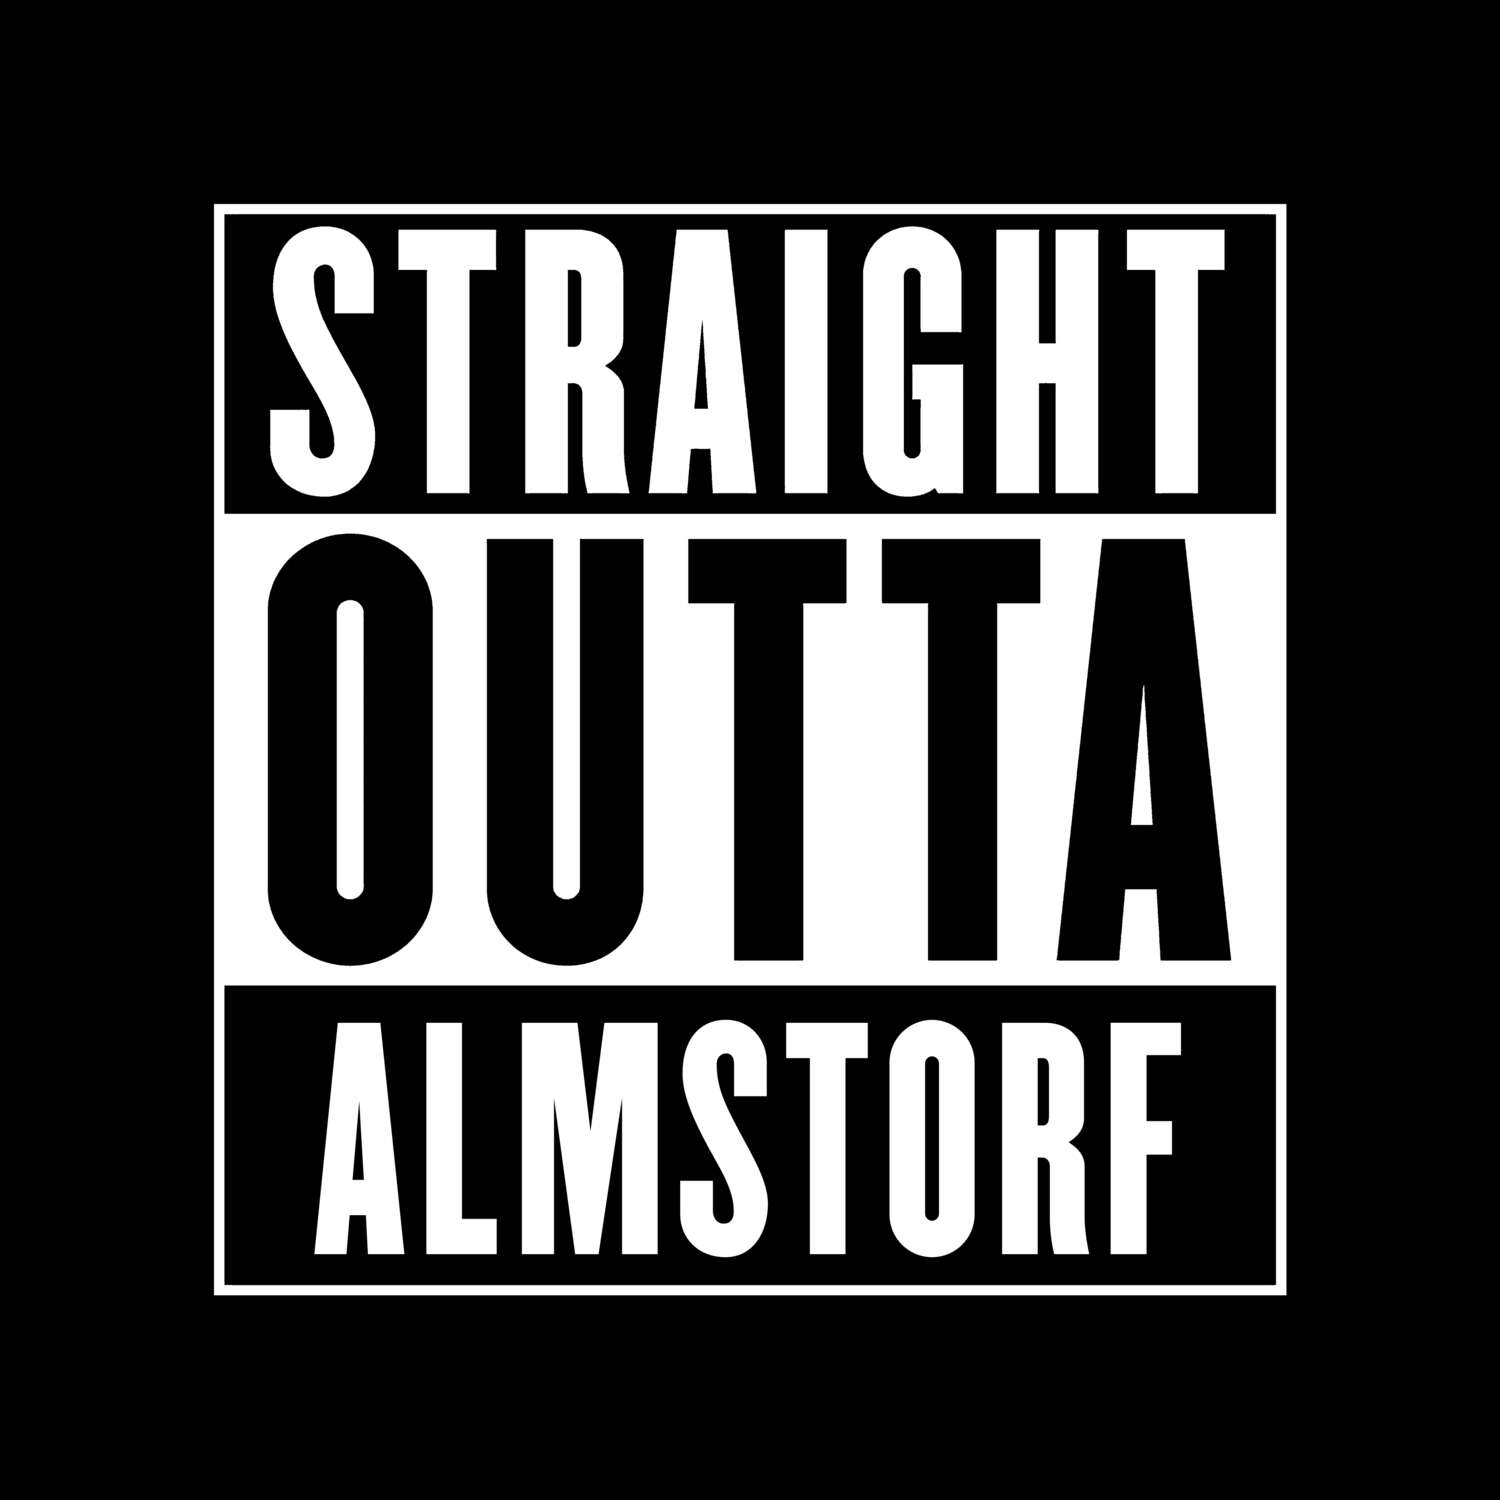 Almstorf T-Shirt »Straight Outta«